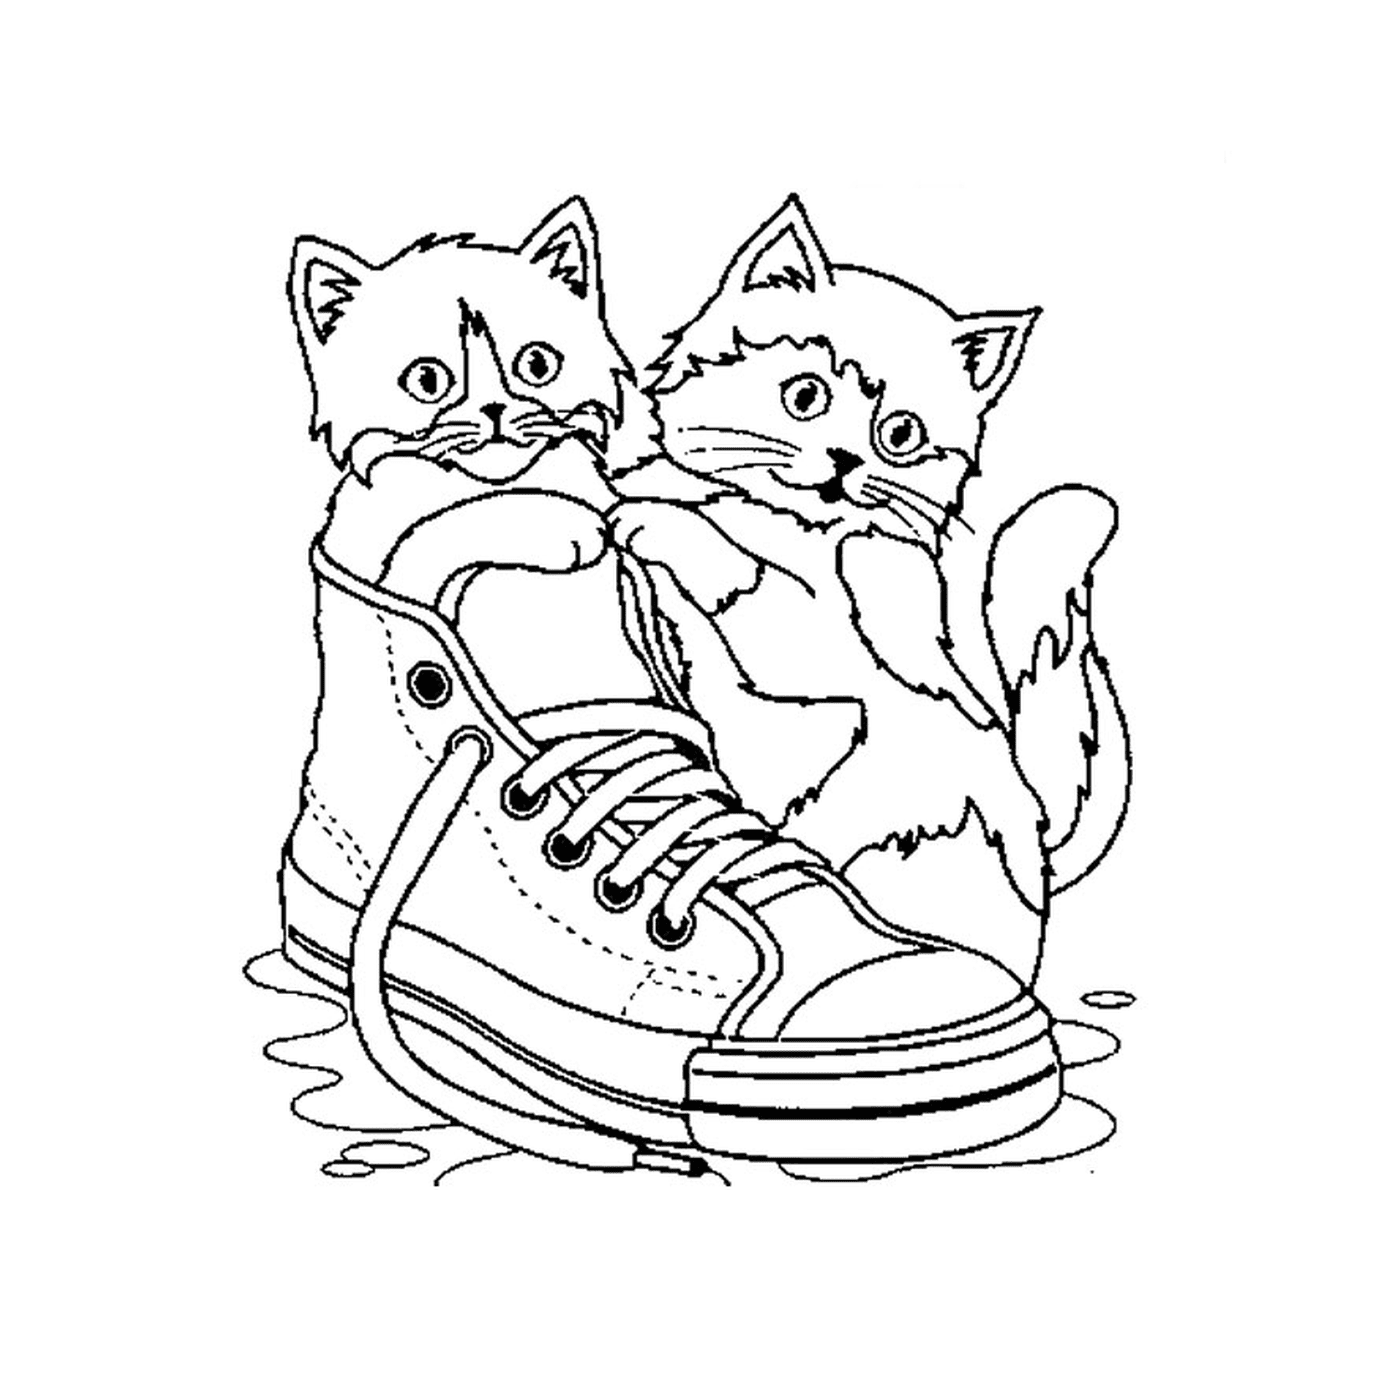  Две кошки сидят на ботинке в воде 